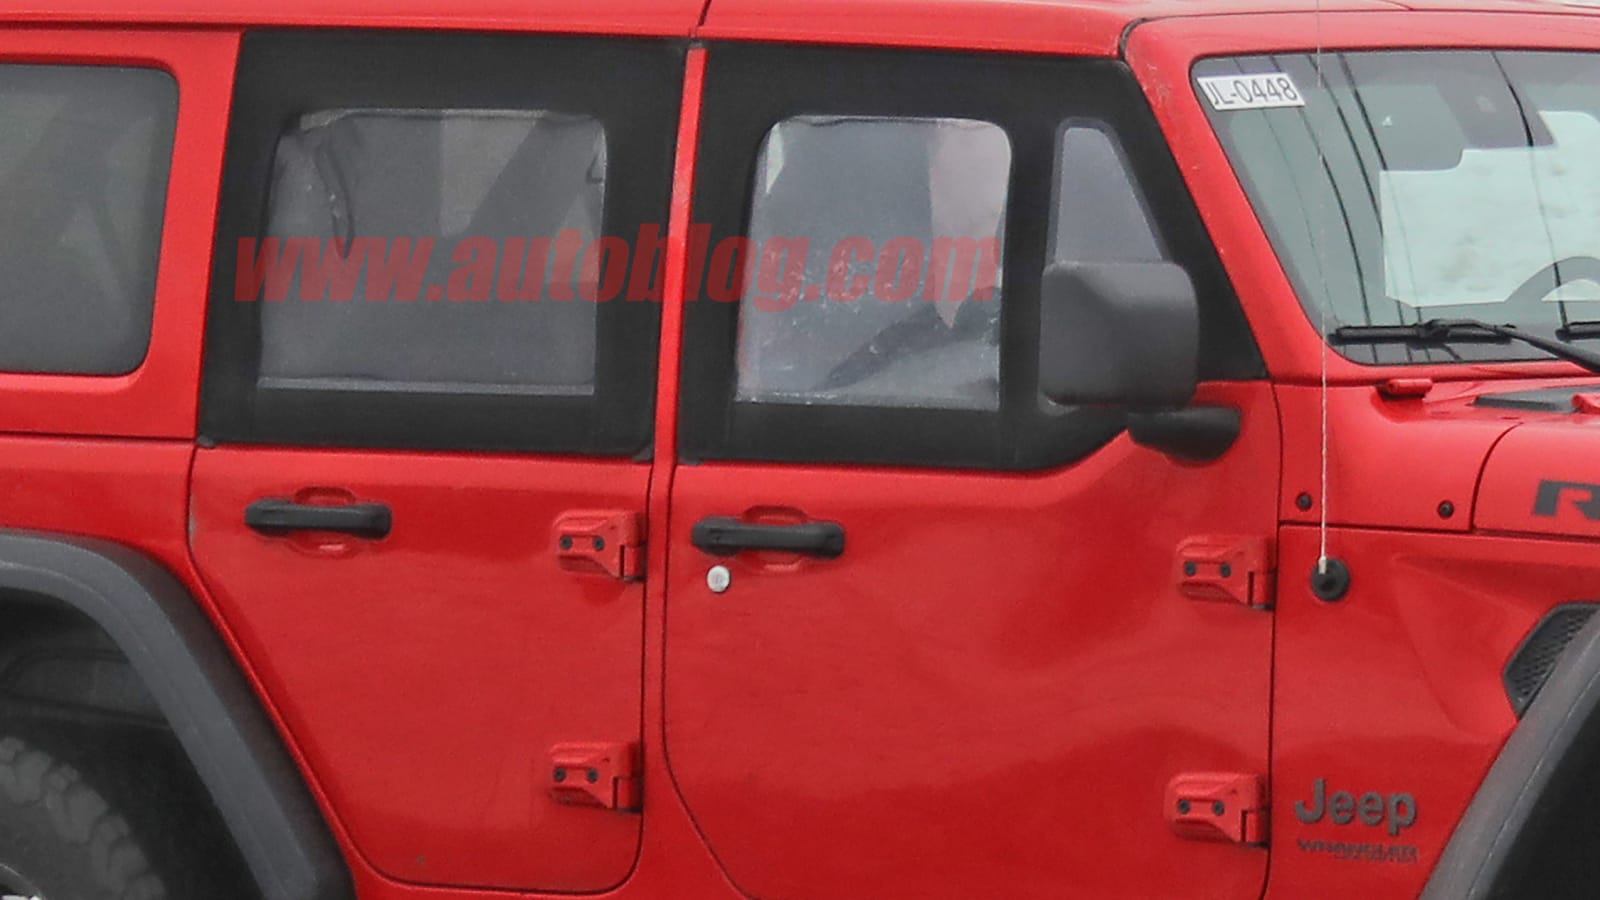 Jeep Wrangler test vehicle spied with half doors - Autoblog